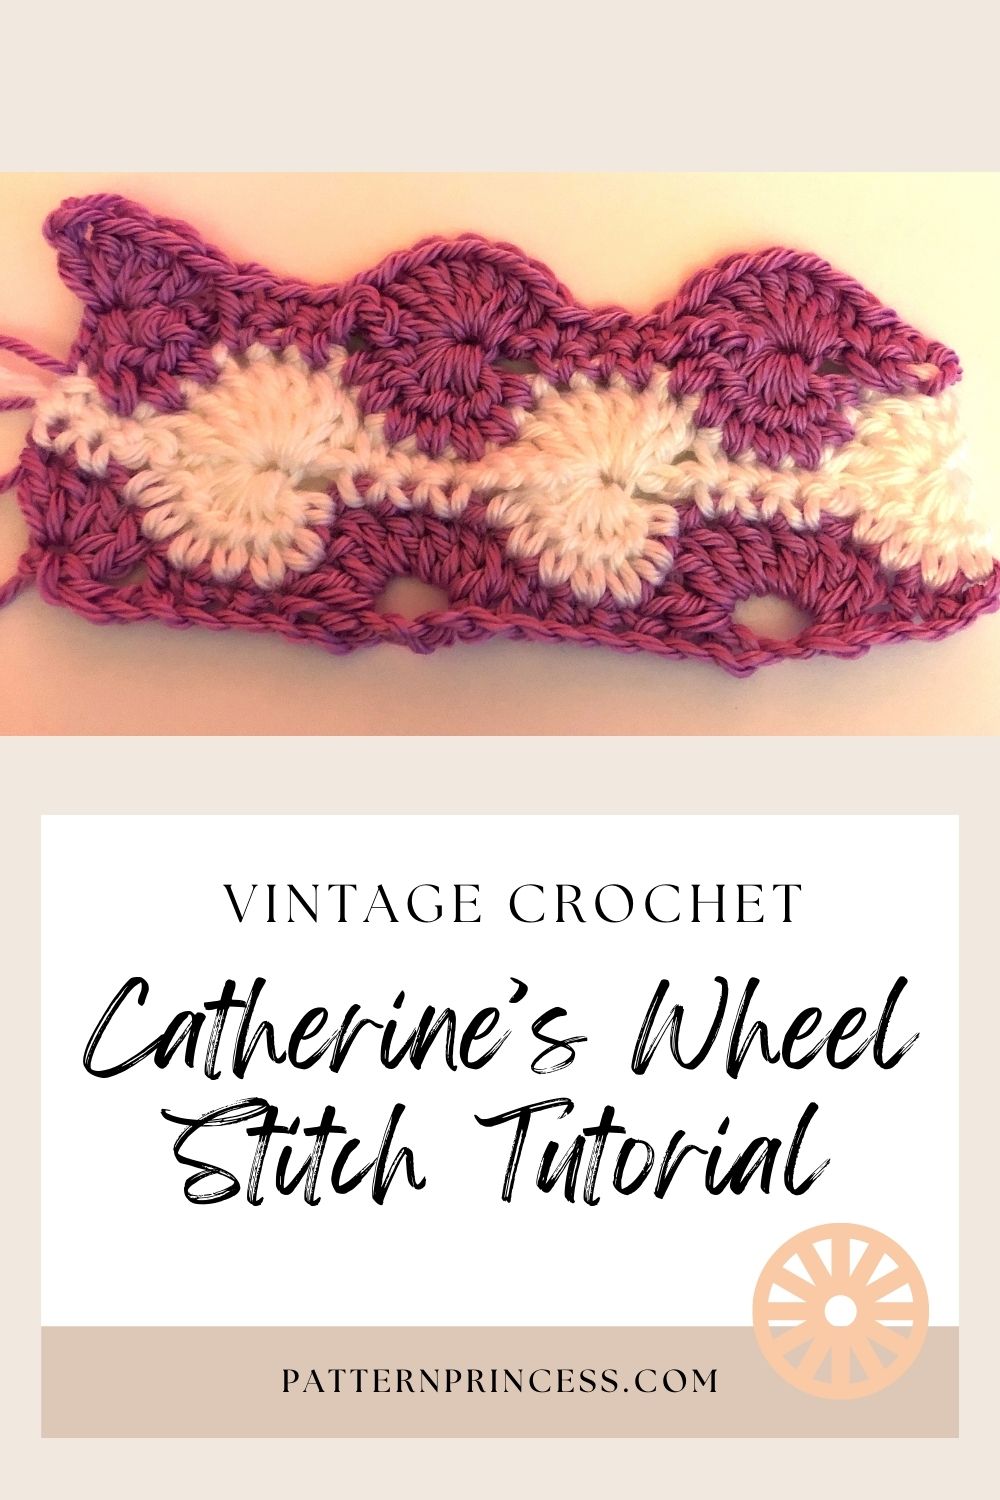 Catherine’s Wheel Stitch Tutorial